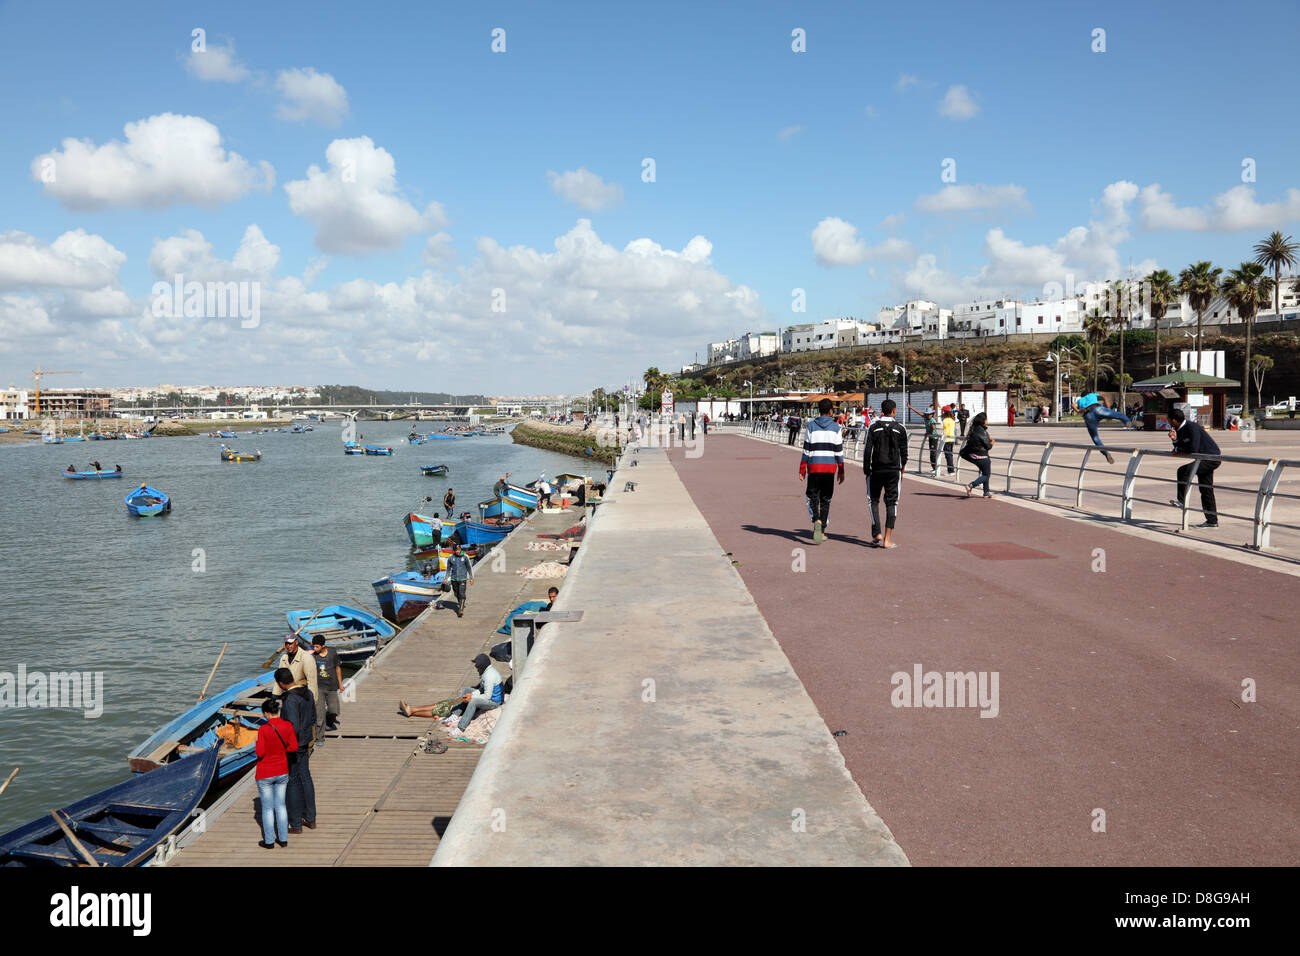 Promenade in the city of Rabat, Morocco Stock Photo